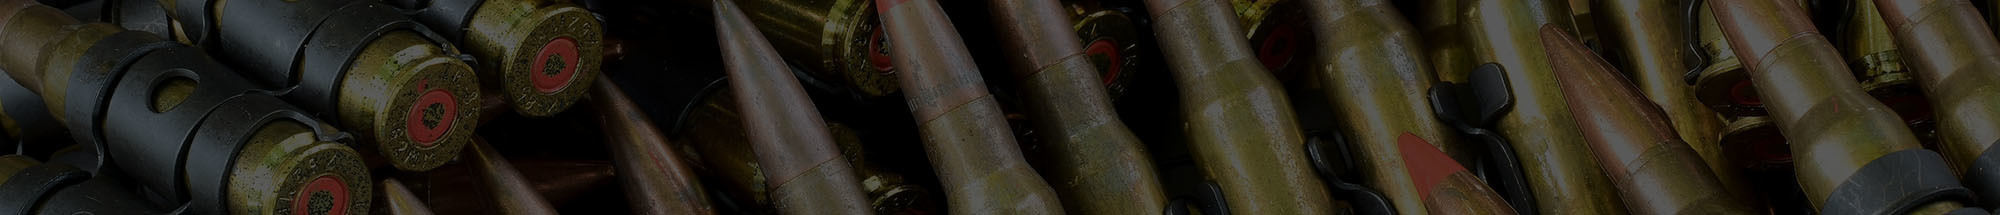 Armor piercing bullets legal